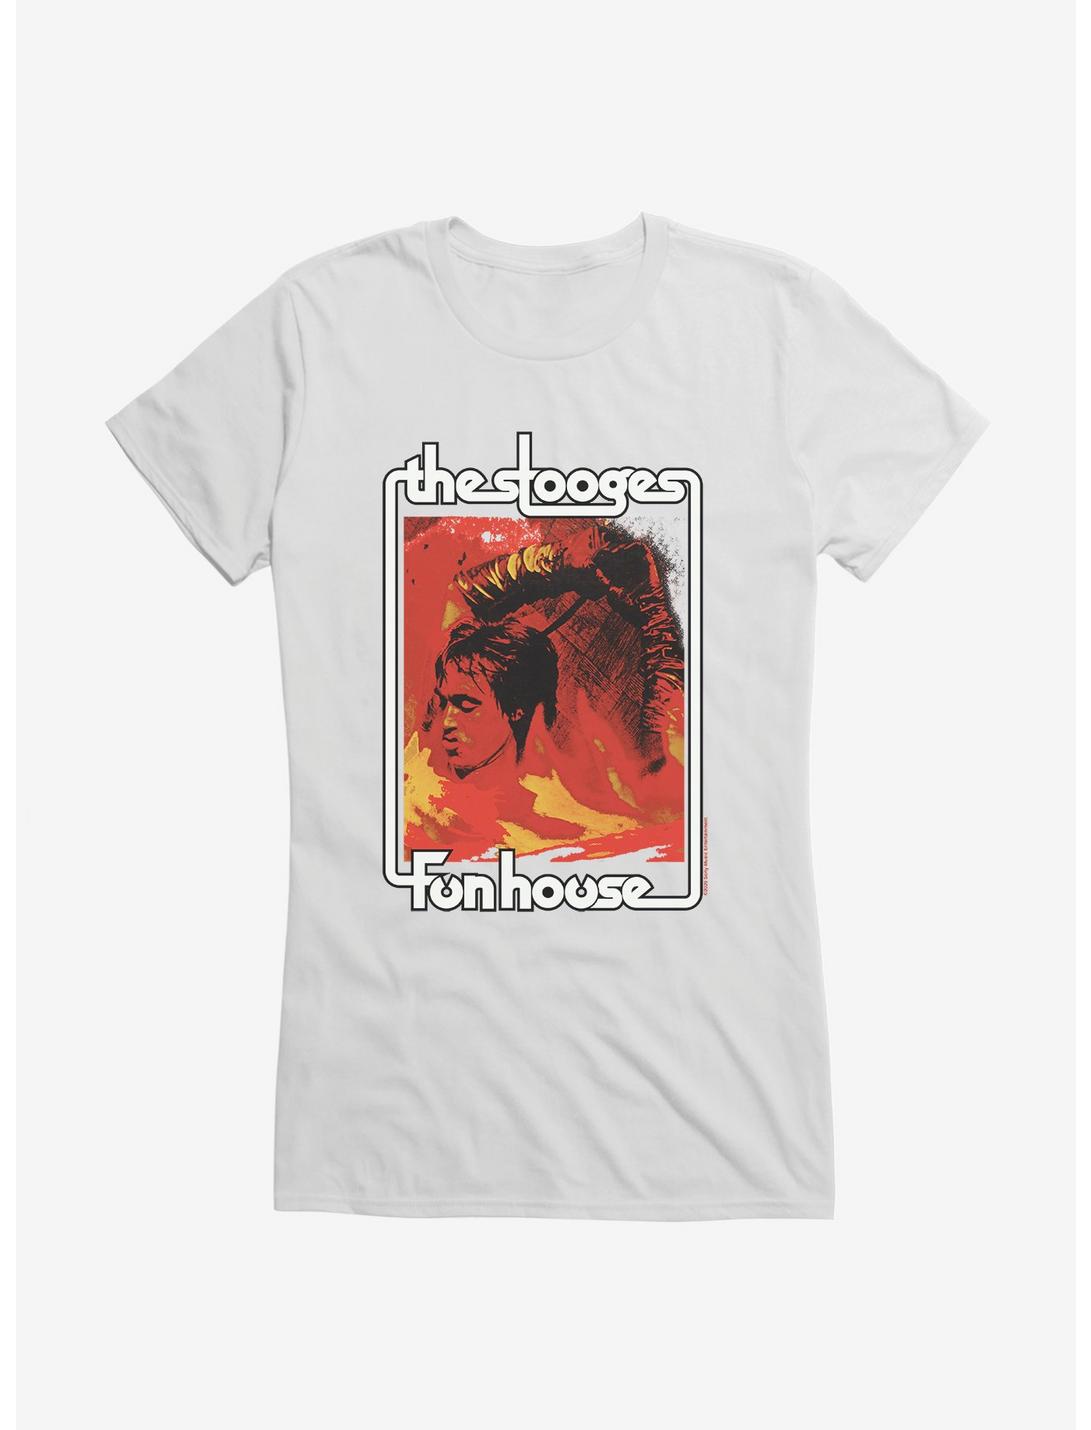 Iggy Pop FunHouse Girls T-Shirt | Hot Topic